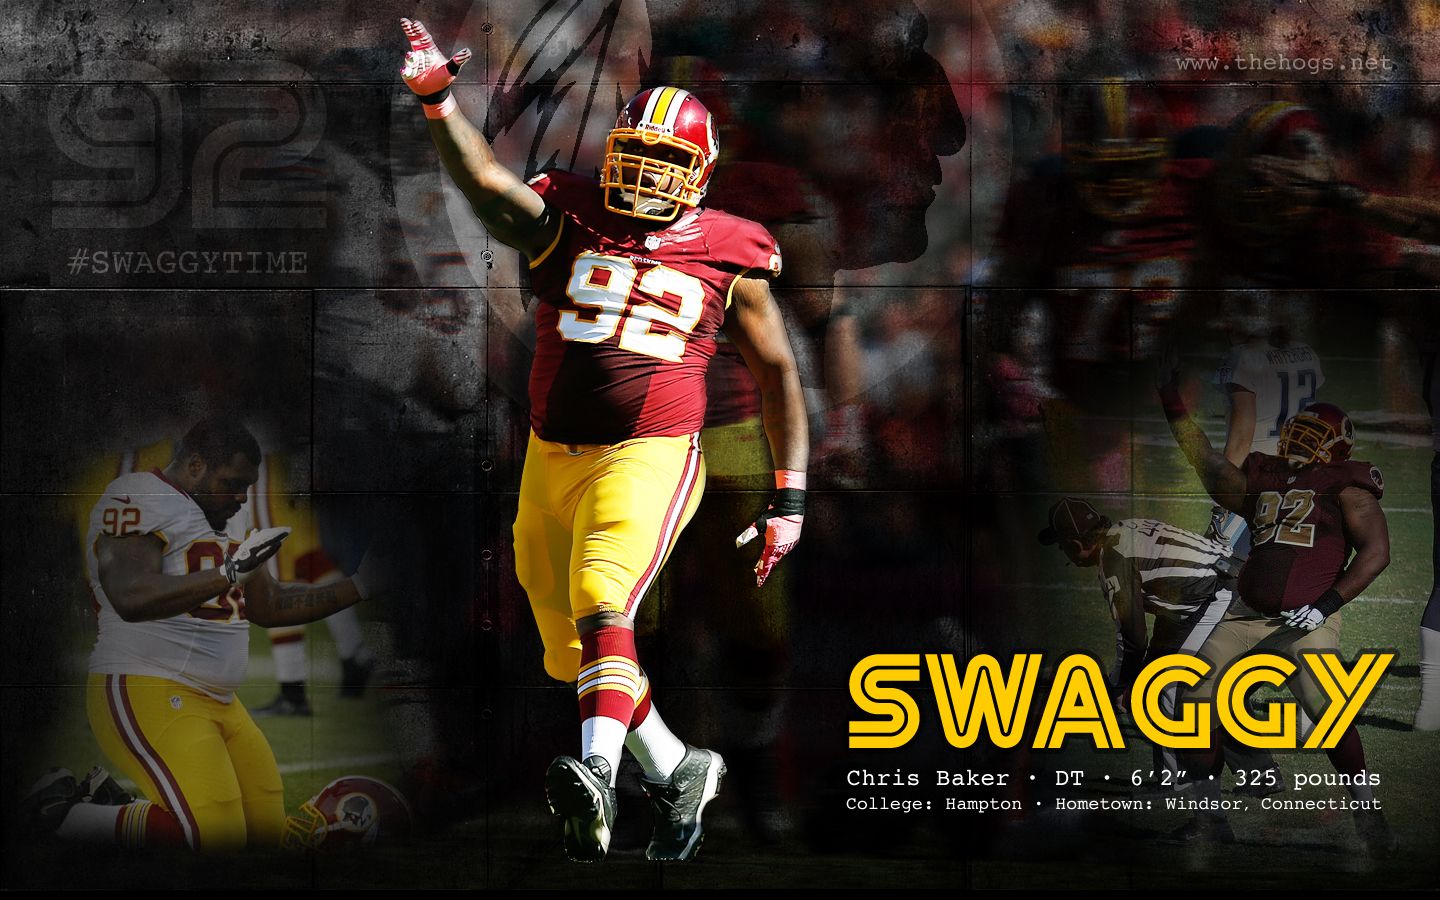 Redskins Wallpaper: Chris “Swaggy” Baker | Hog Blogs